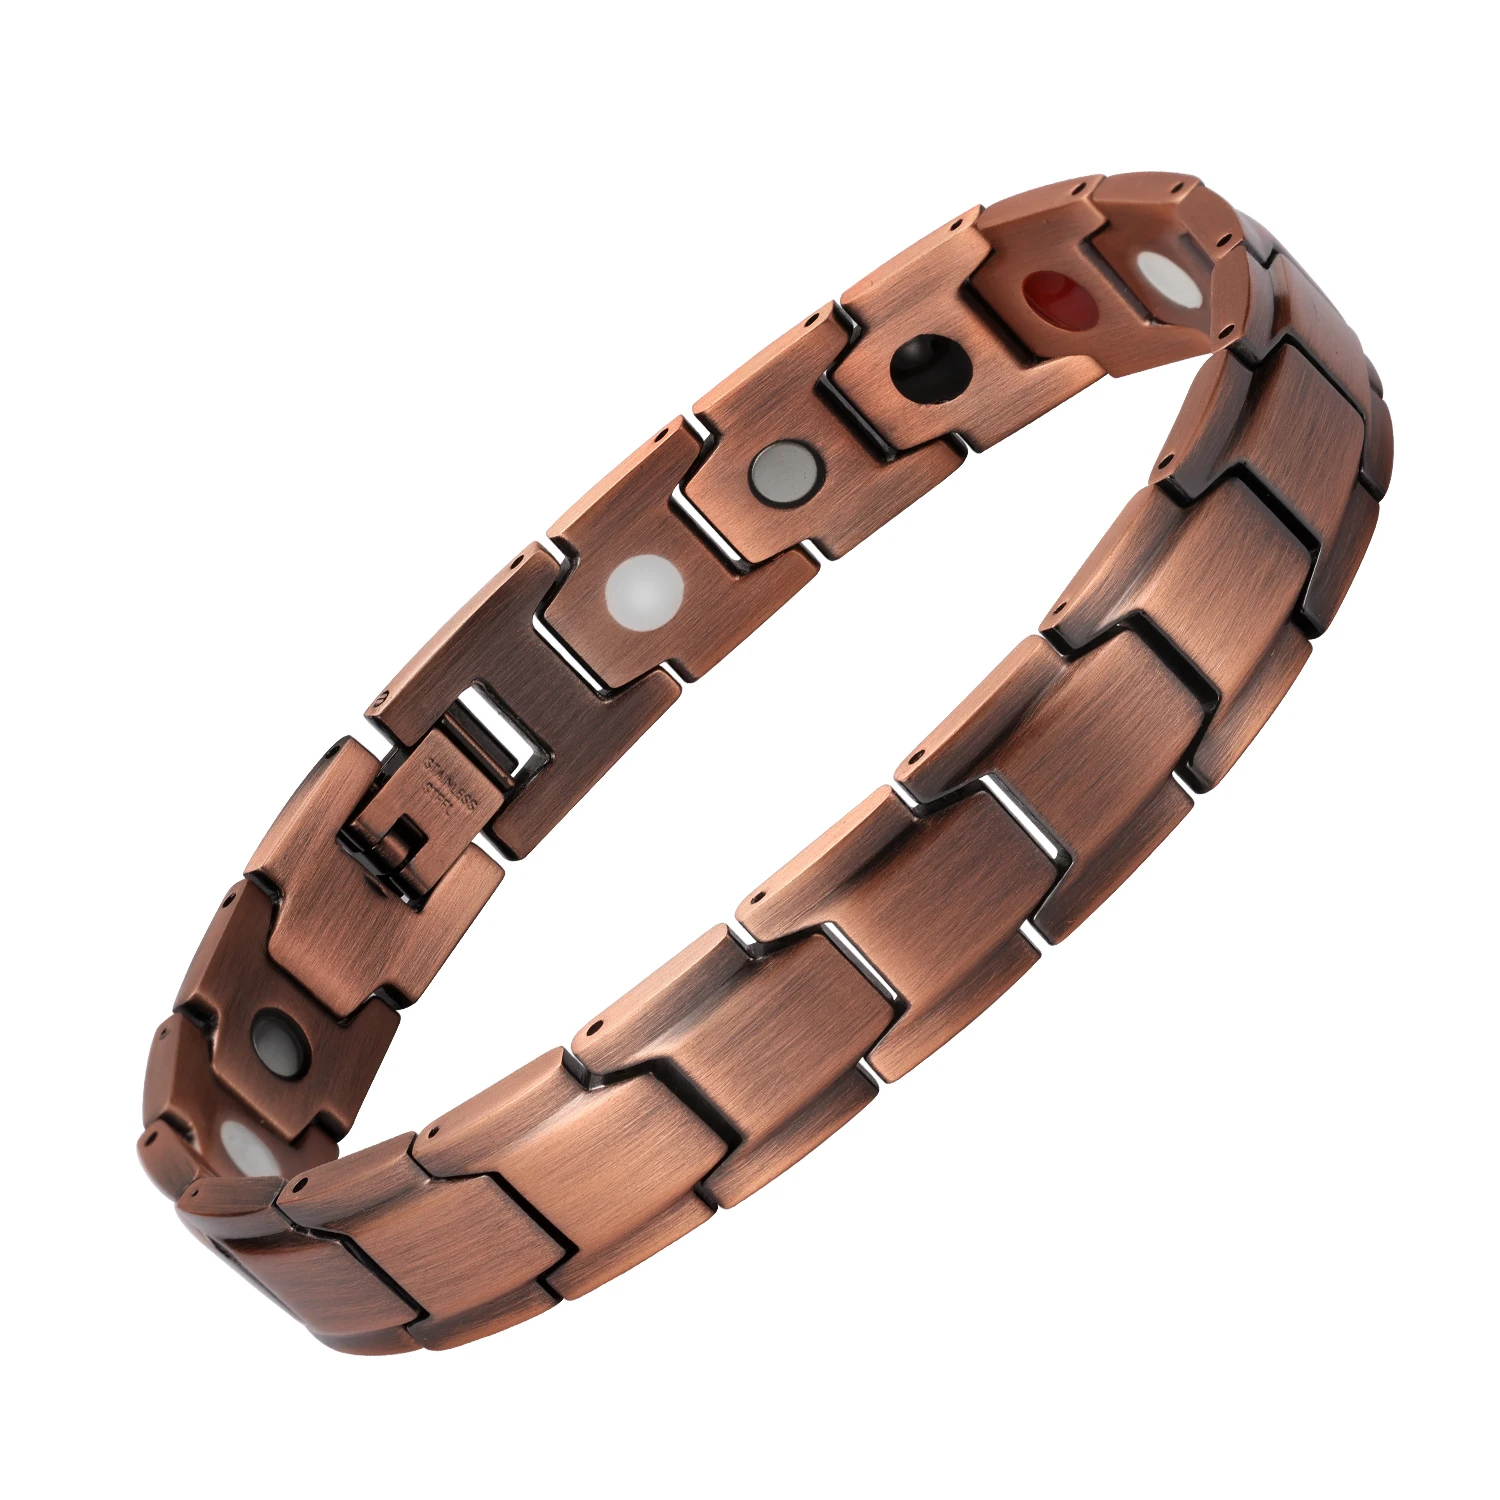 

4 Bio Elements Healing 99.95% Pure Copper Bracelet for Men VINTAGE Fashion Jewelry Pain Relief & Arthritis Accessories